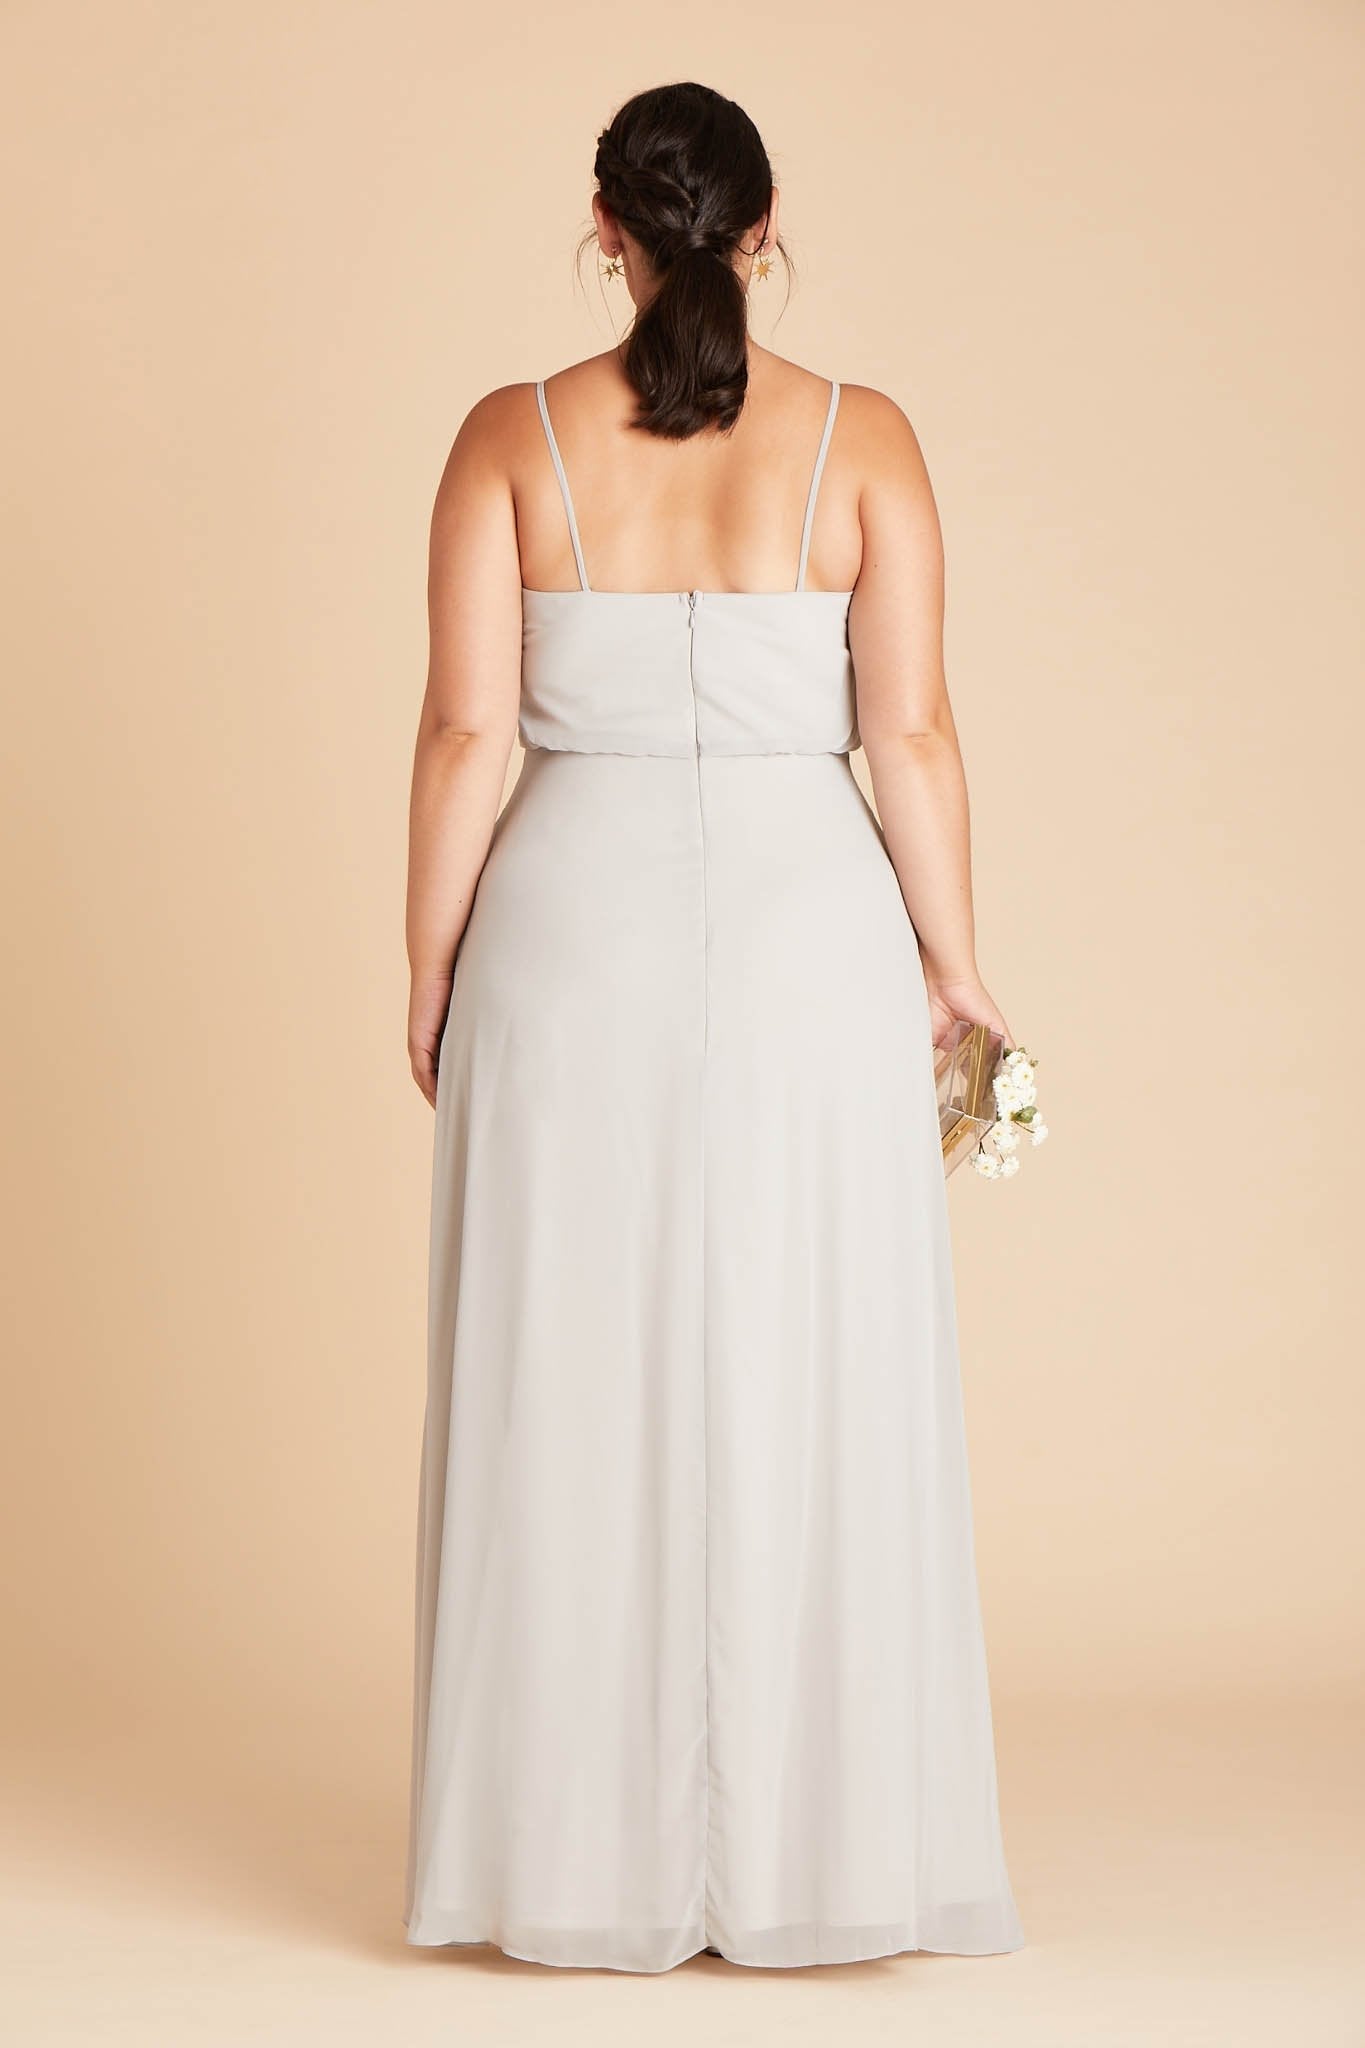 Gwennie plus size bridesmaid dress in dove gray chiffon by Birdy Grey, back view